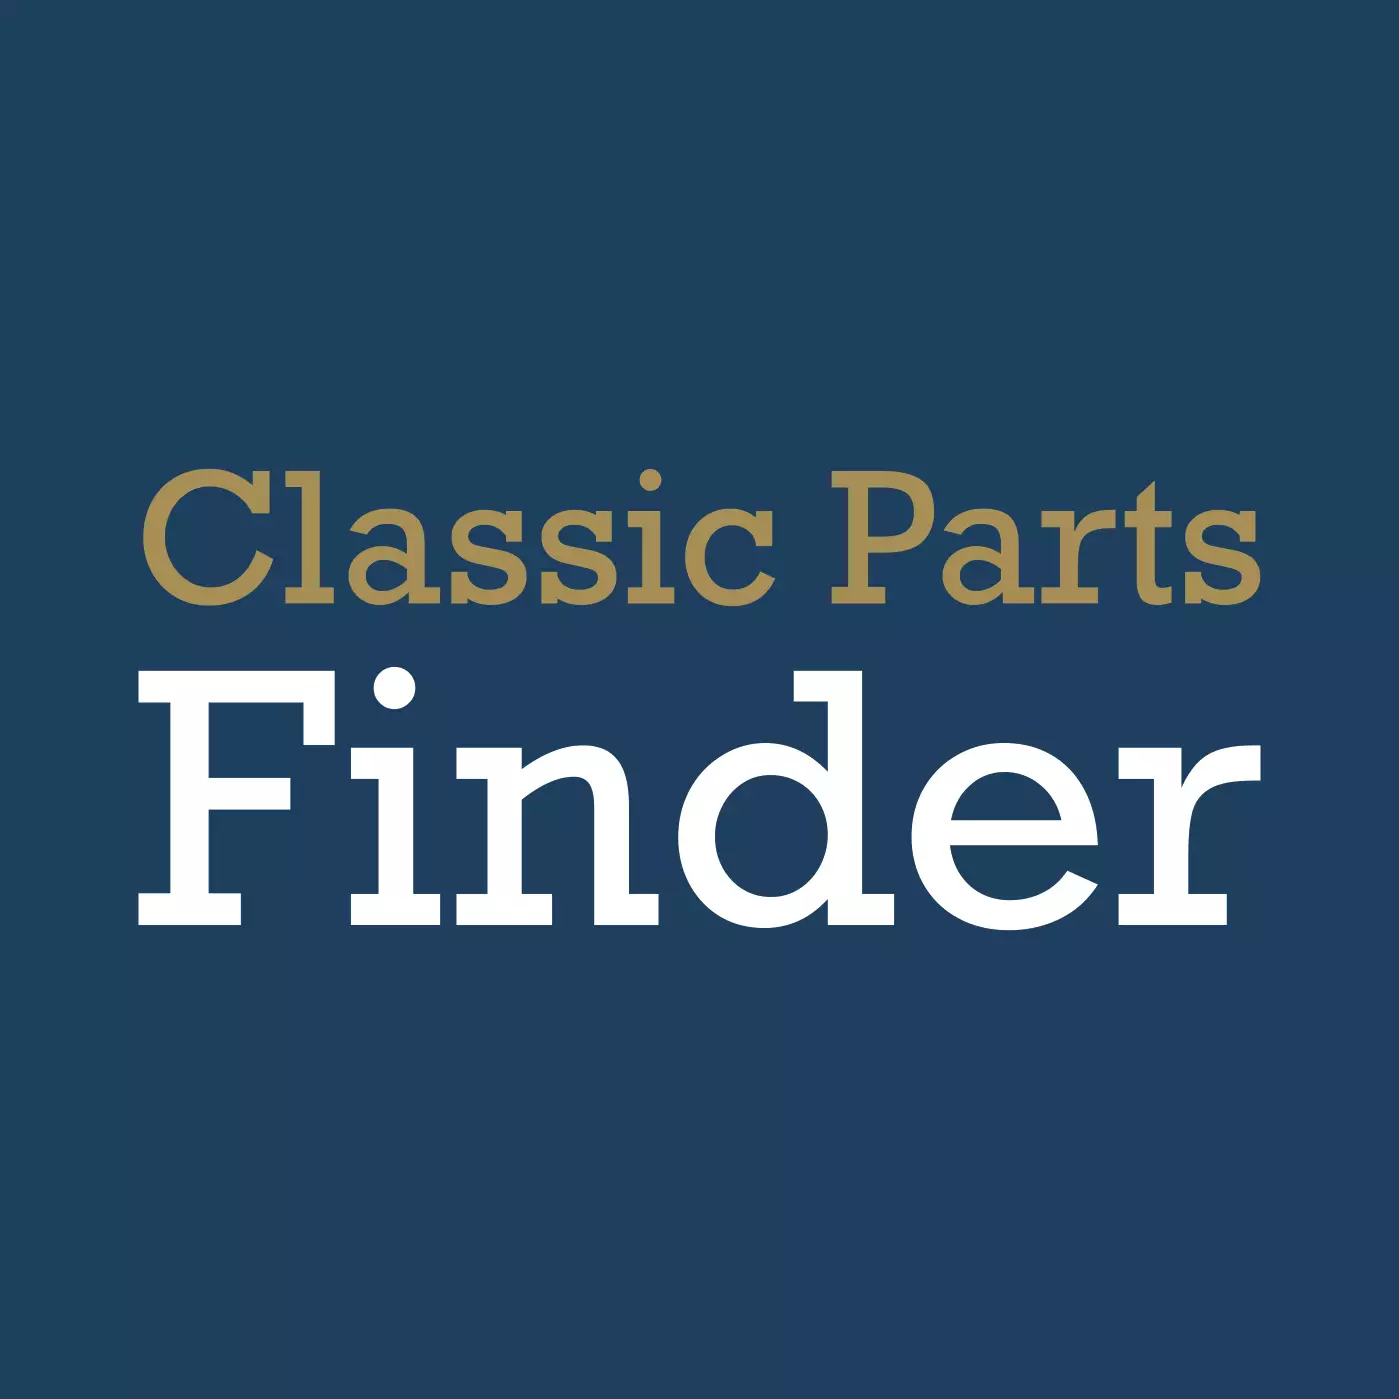 (c) Classic-parts-finder.com